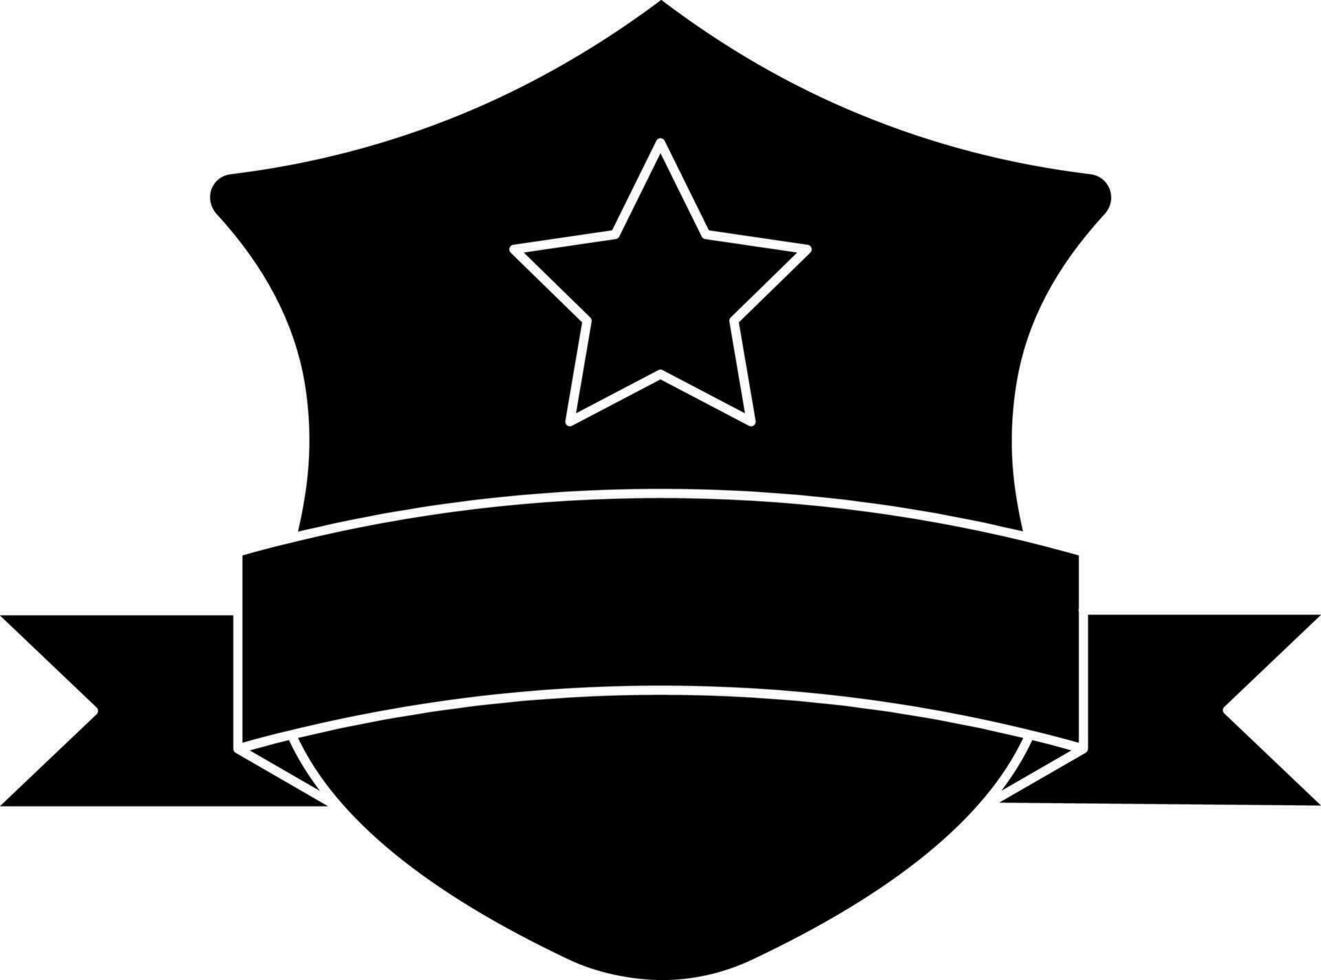 Award Shield Icon In Black And White Color. vector